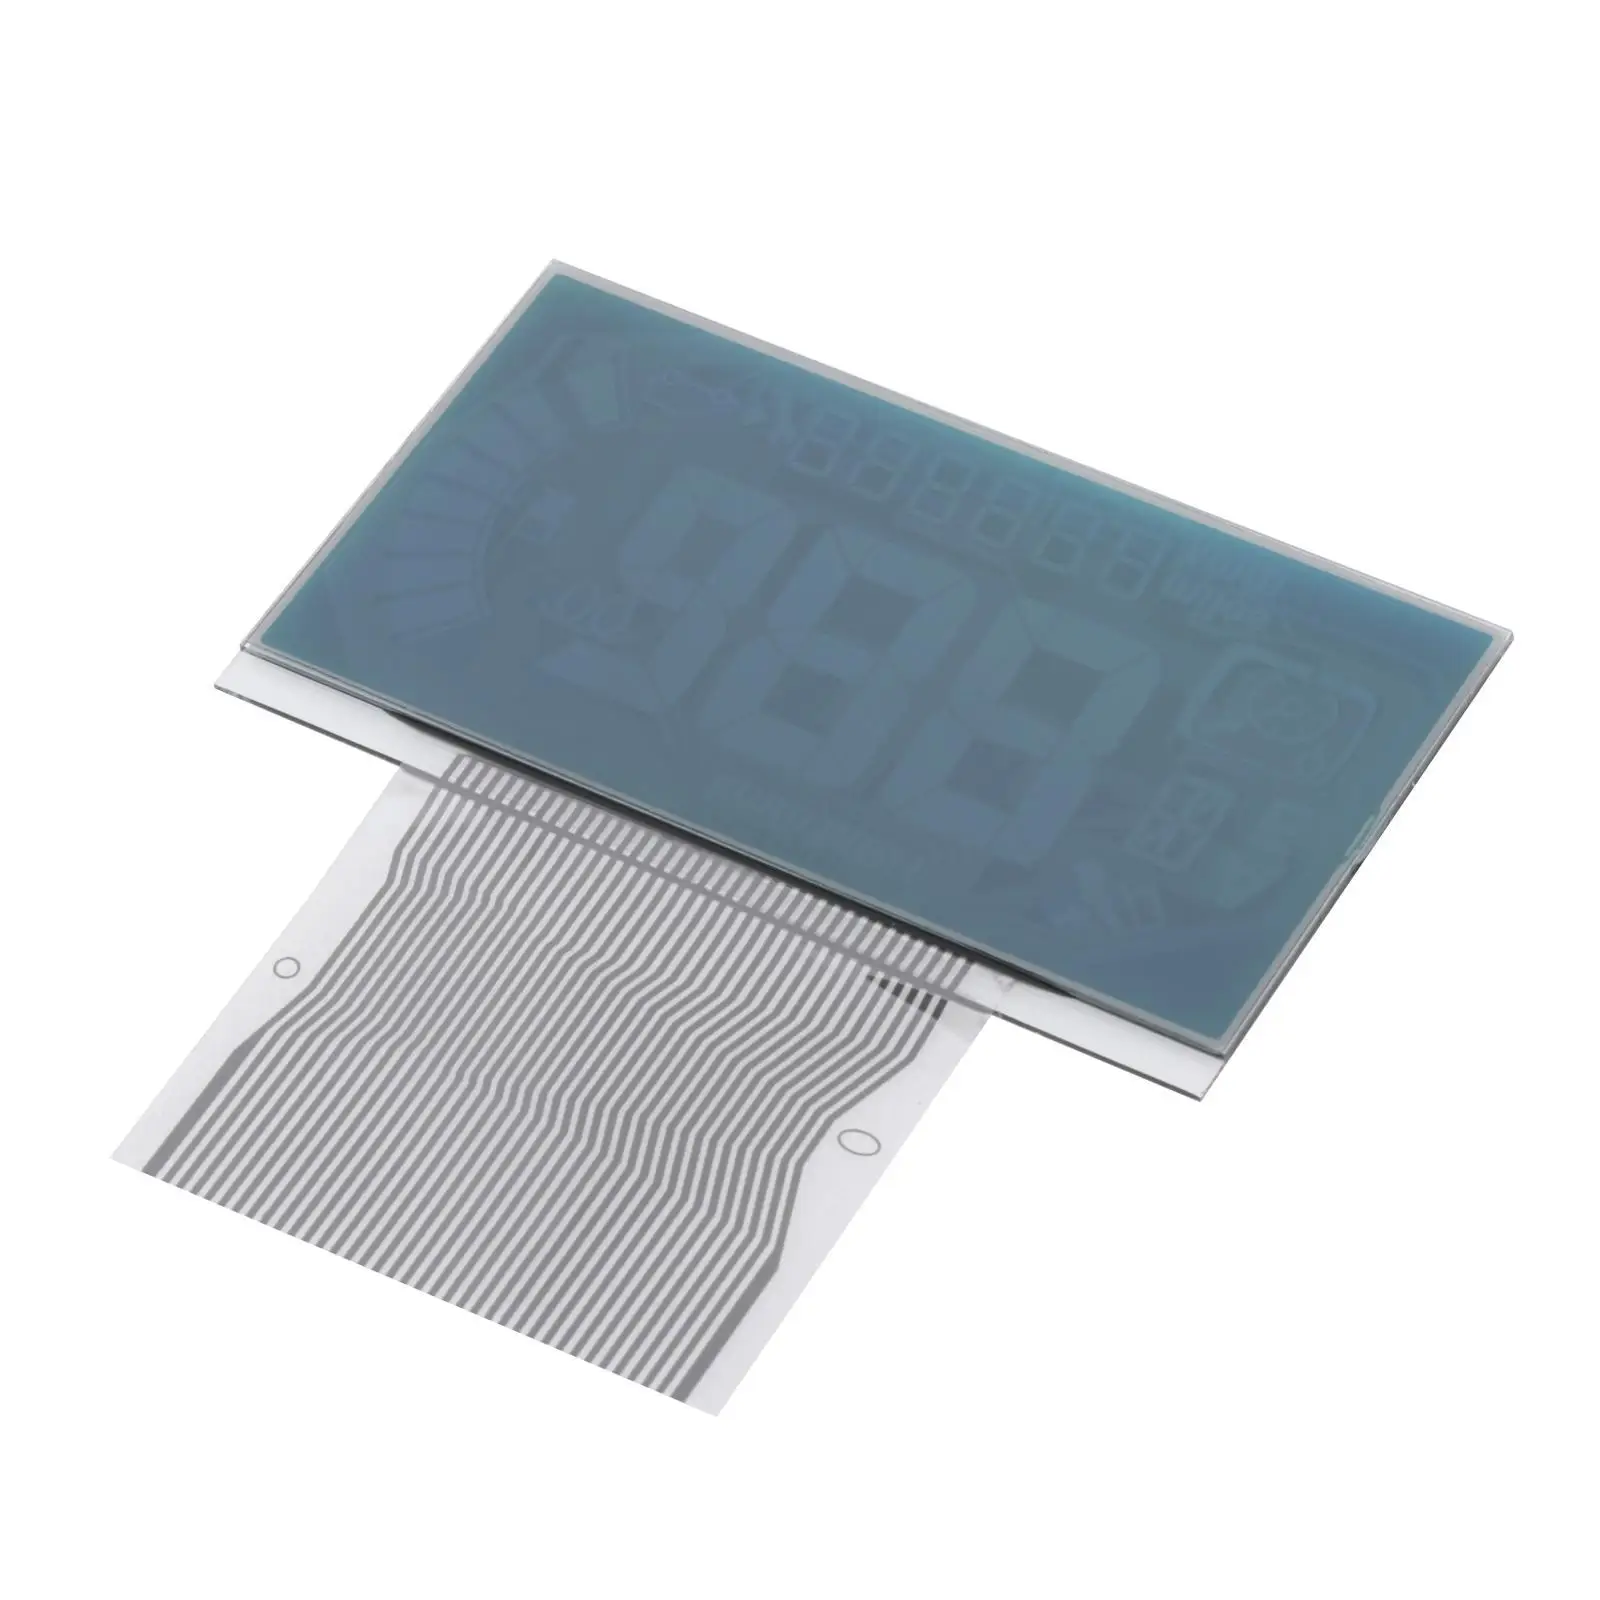 Dashboard LCD Display Instrument   MK2 Combi Direct Replaces Premium High 